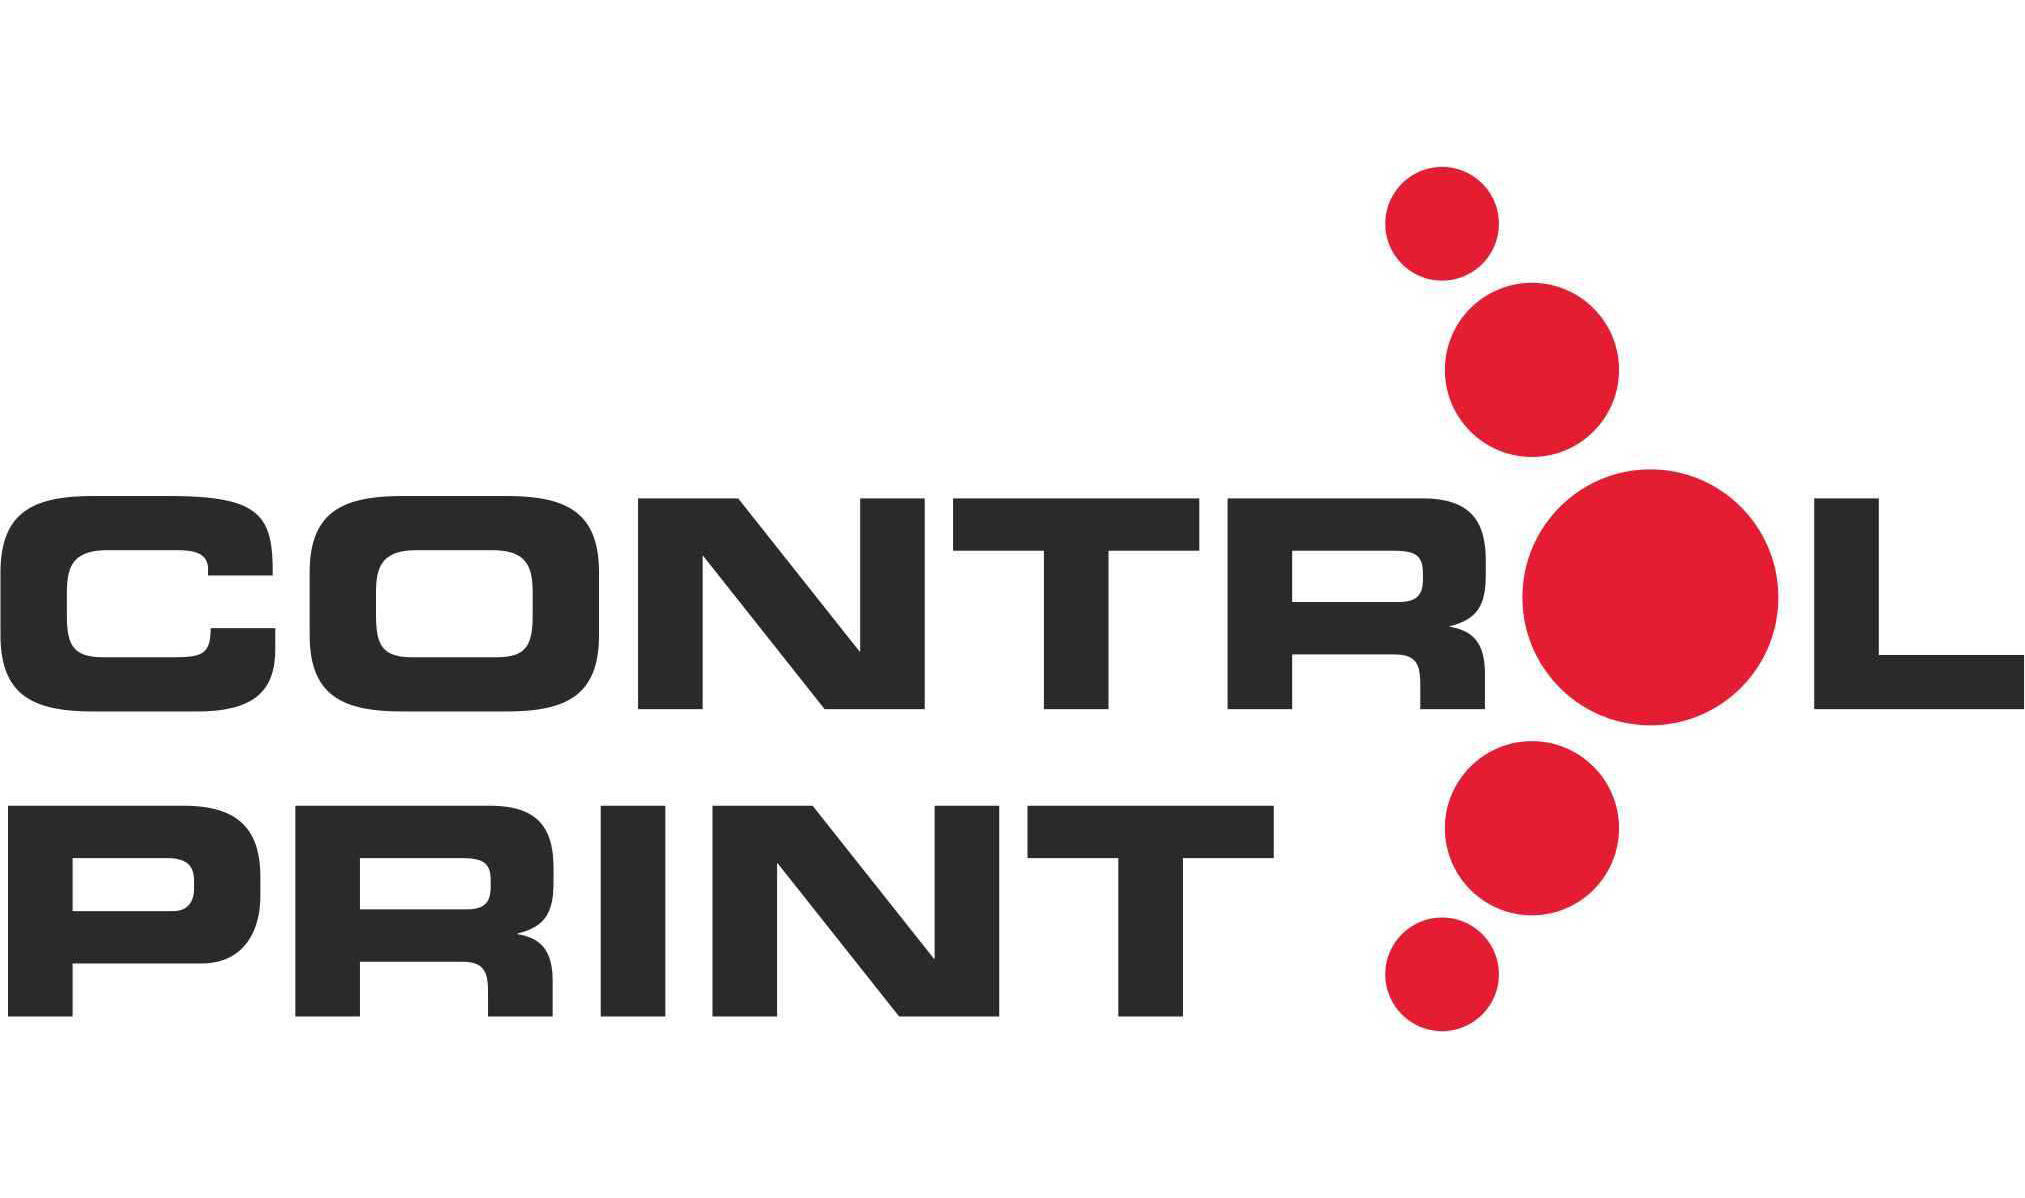 Control press. Control Print. Share Control. Chehong Industrial Limited печать. Контрол принт сервис отзывы.